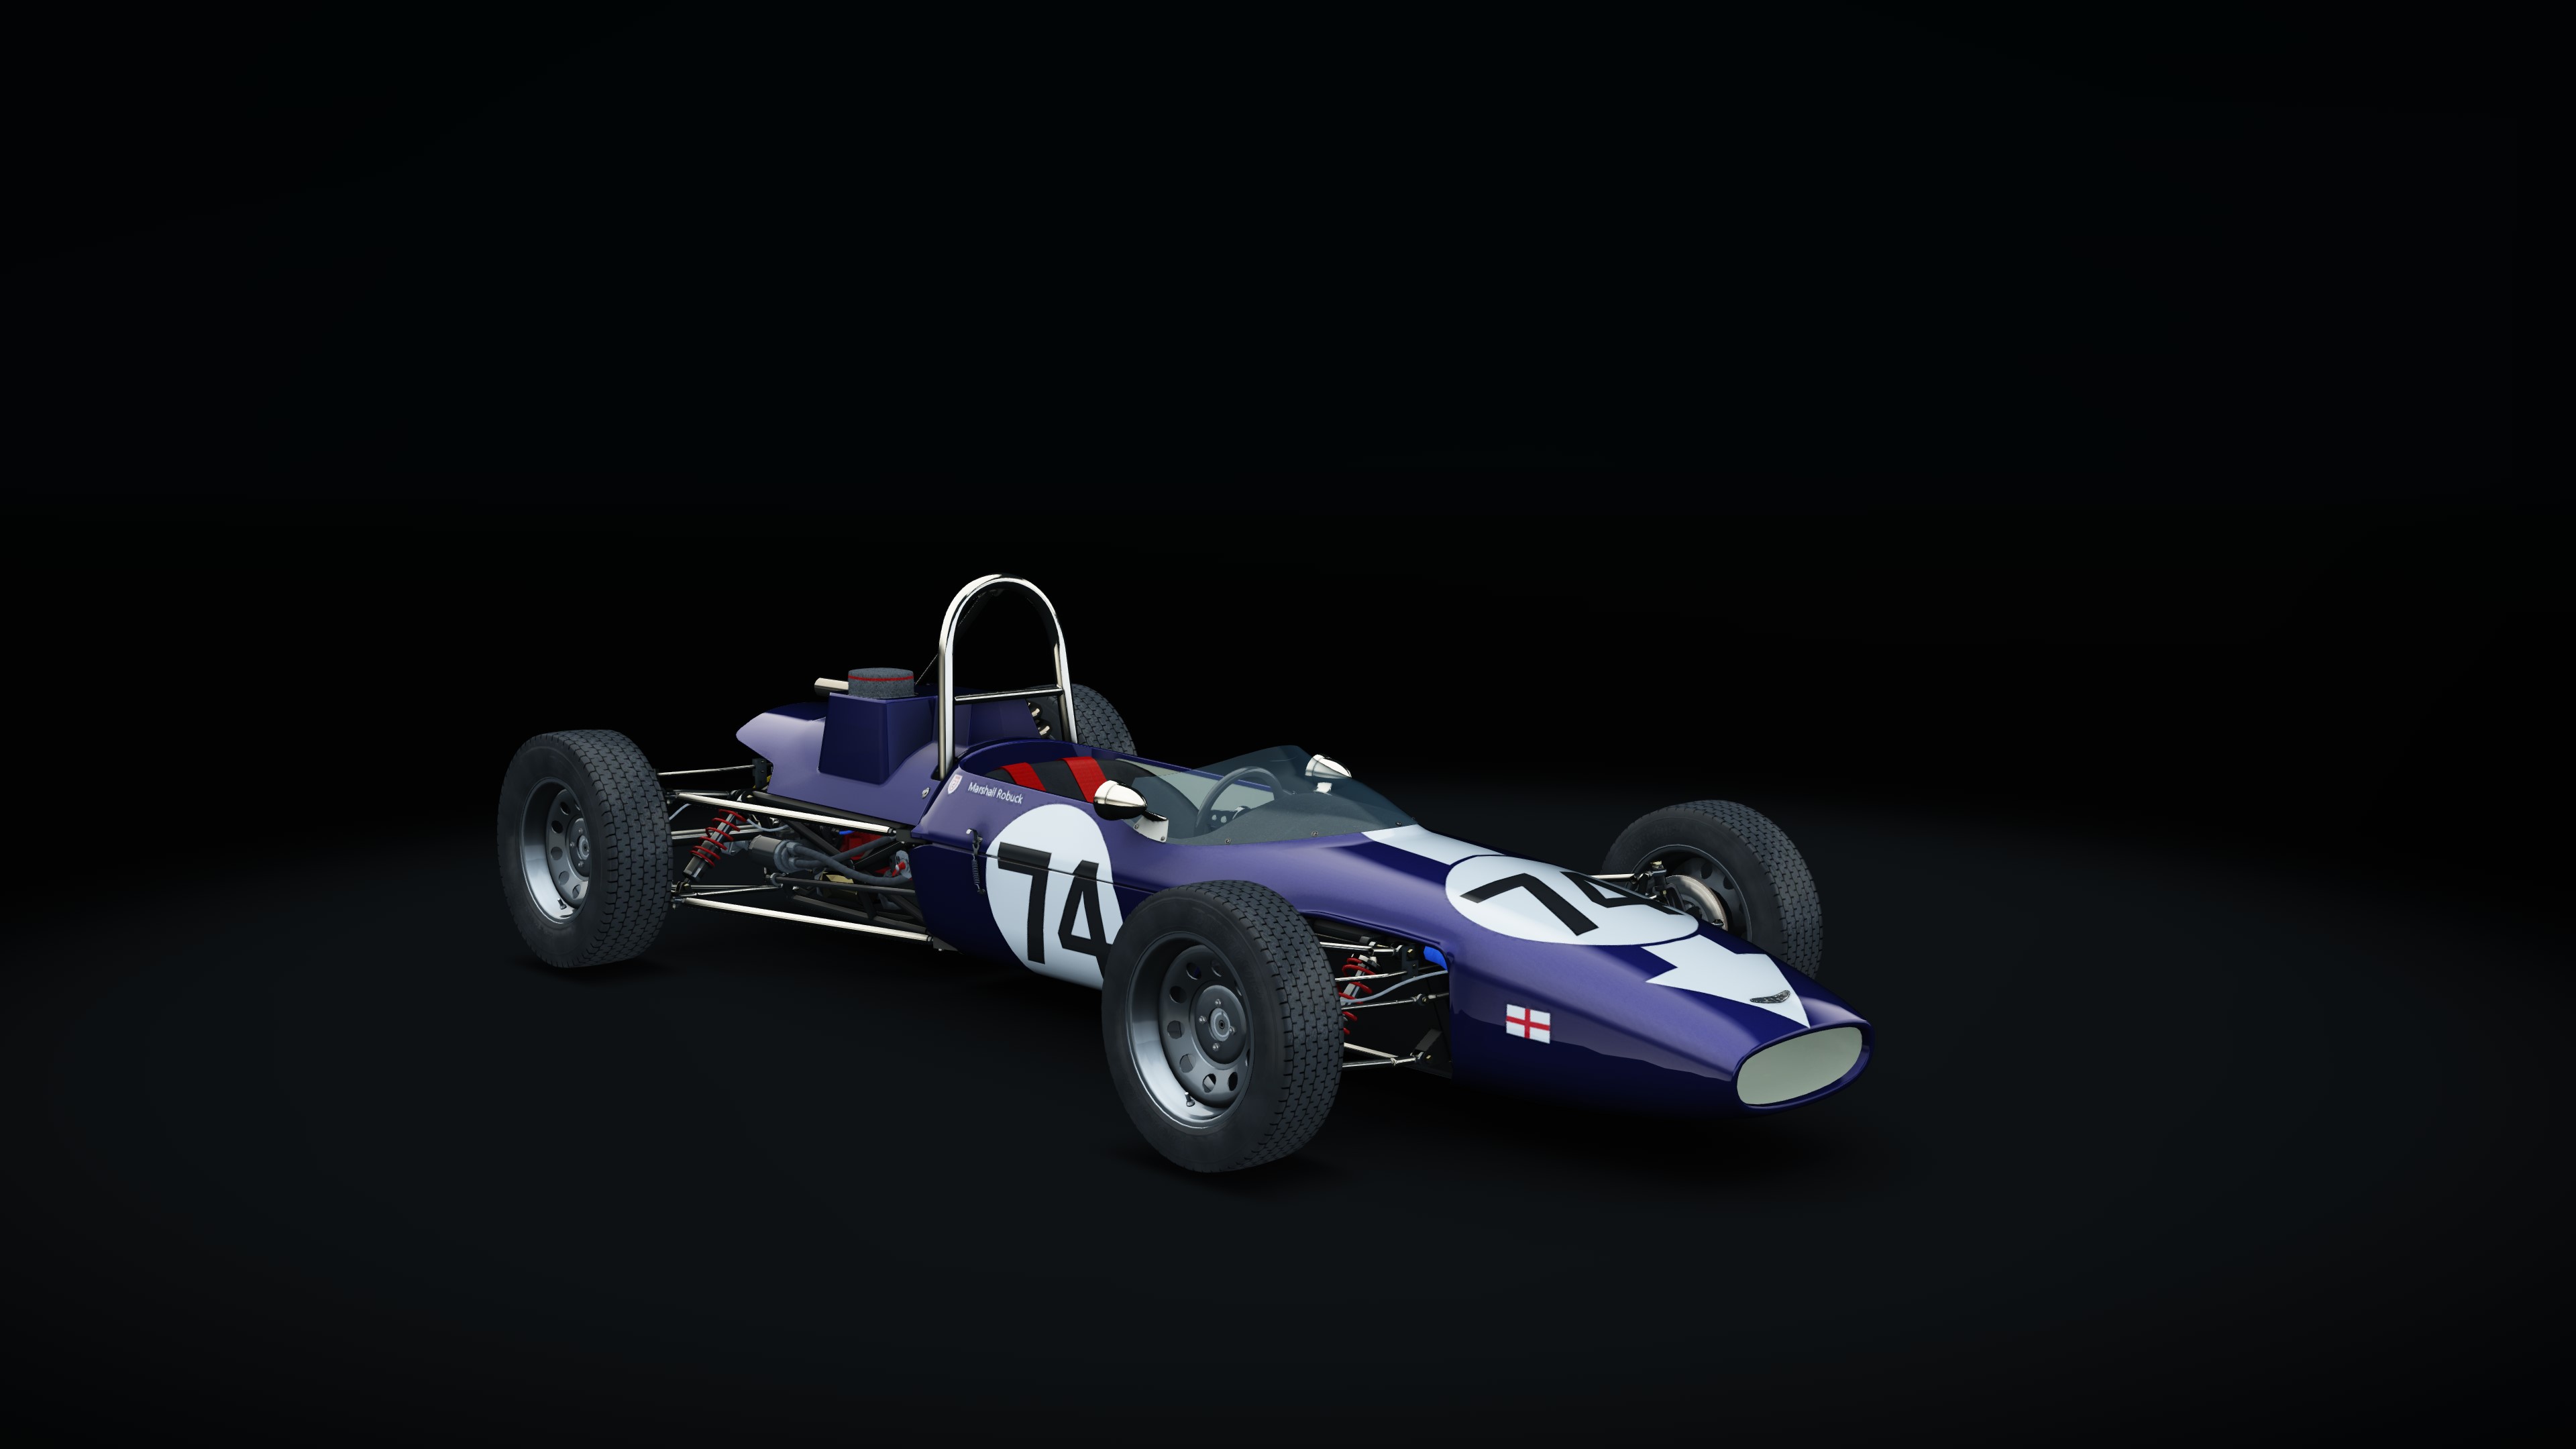 Russell-Alexis Mk. 14 Formula Ford, skin 74MRoback